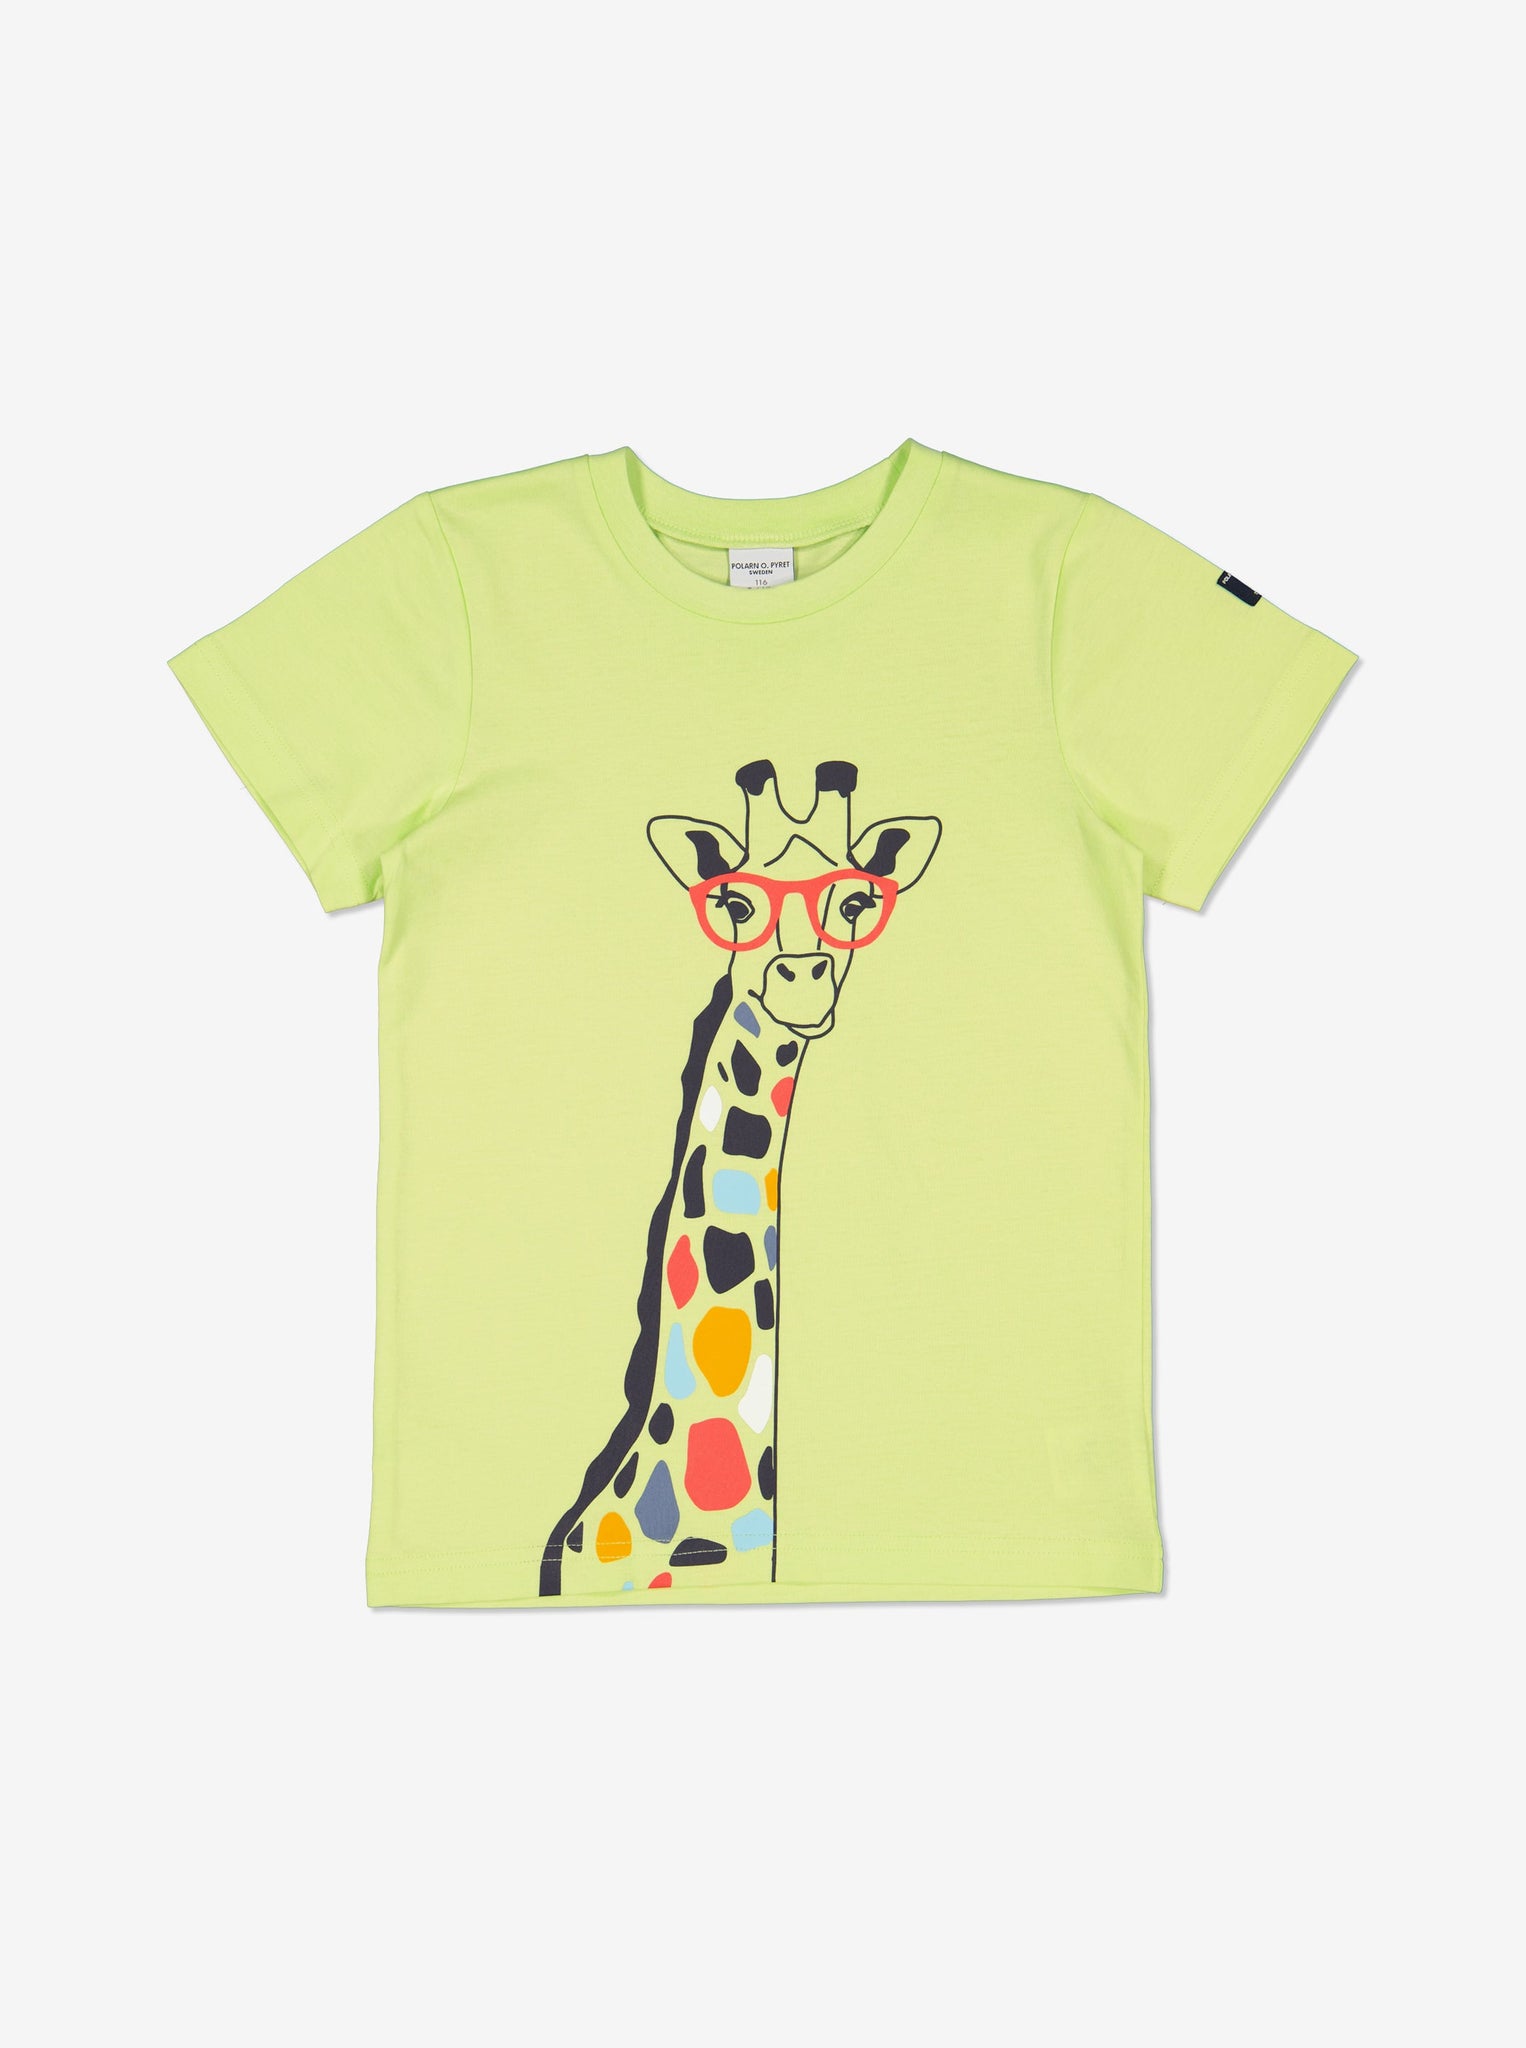 Yellow Kids Giraffe T-Shirt from Polarn O. Pyret Kidswear. Made from 100% GOTS Organic Cotton.